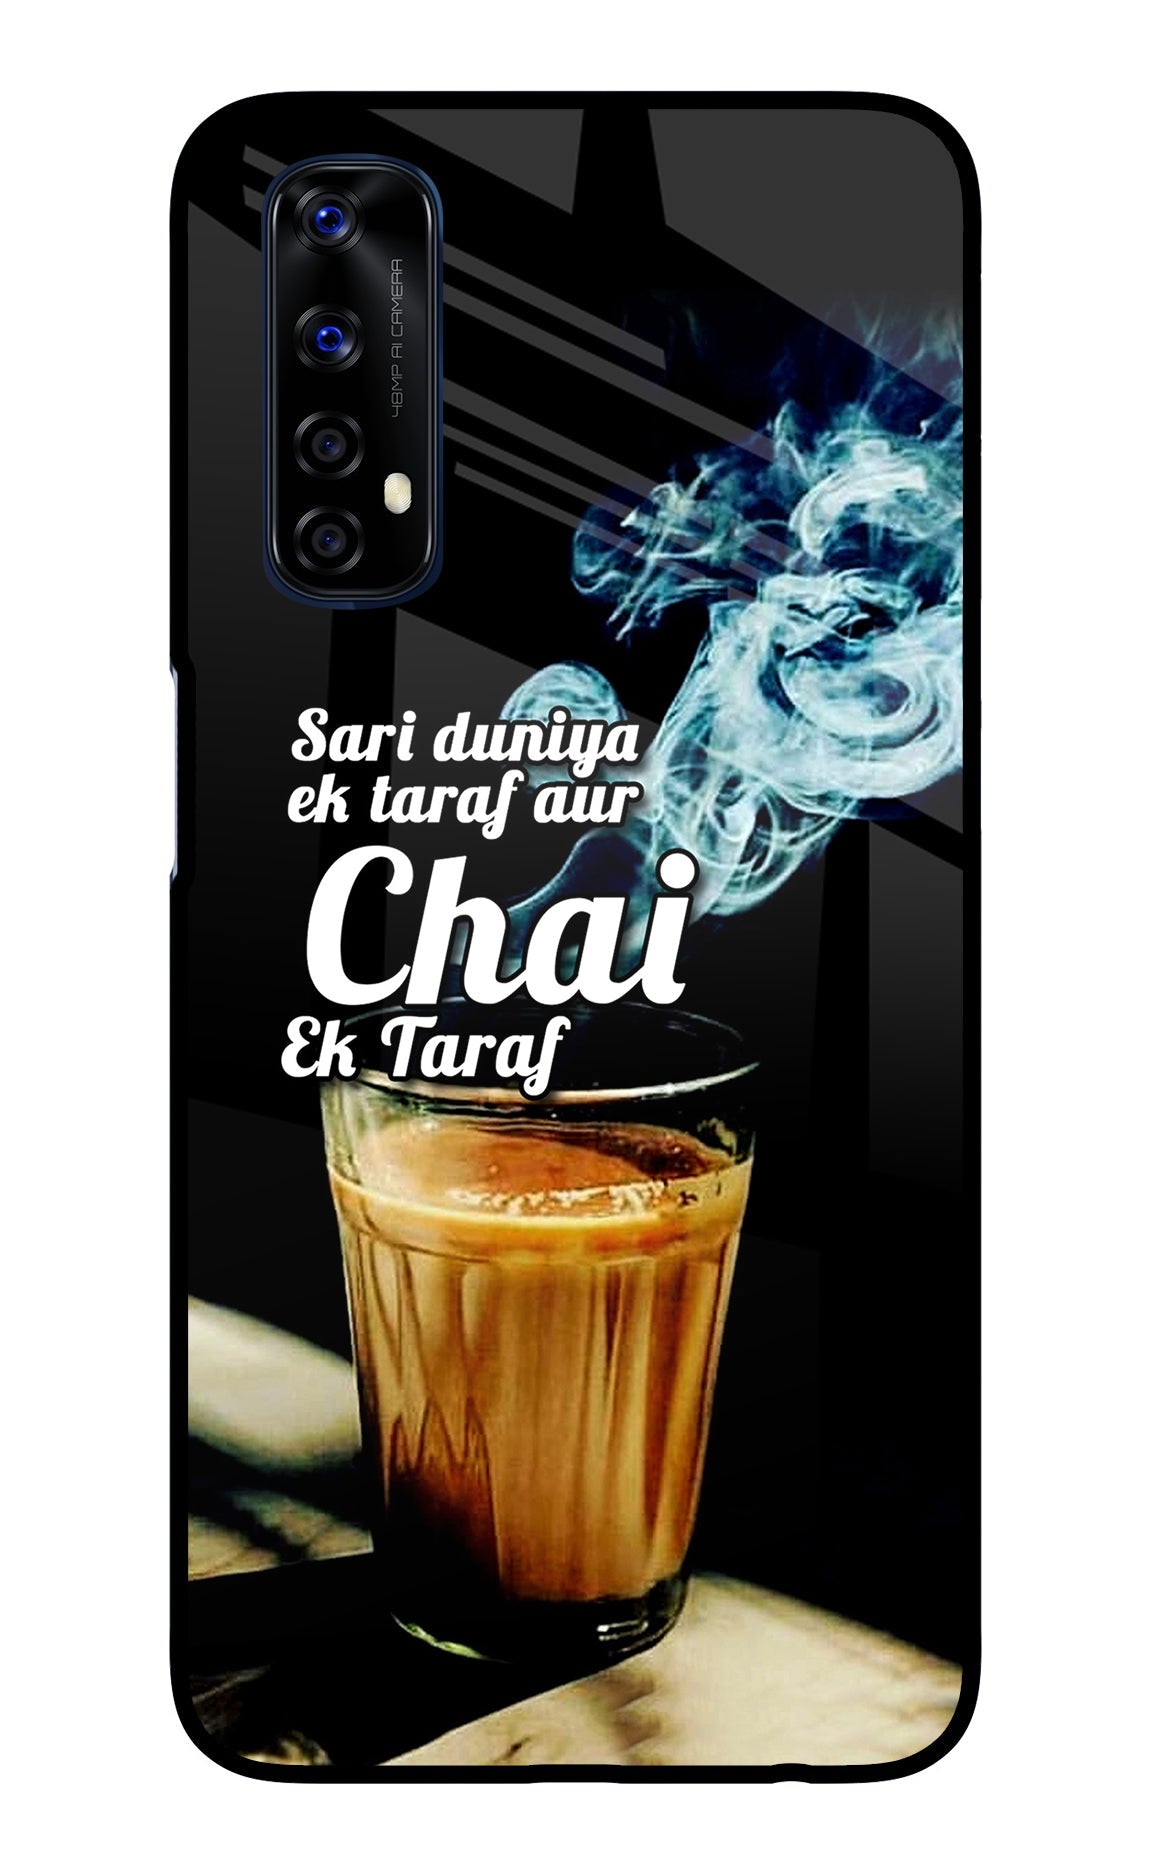 Chai Ek Taraf Quote Realme 7/Narzo 20 Pro Glass Case